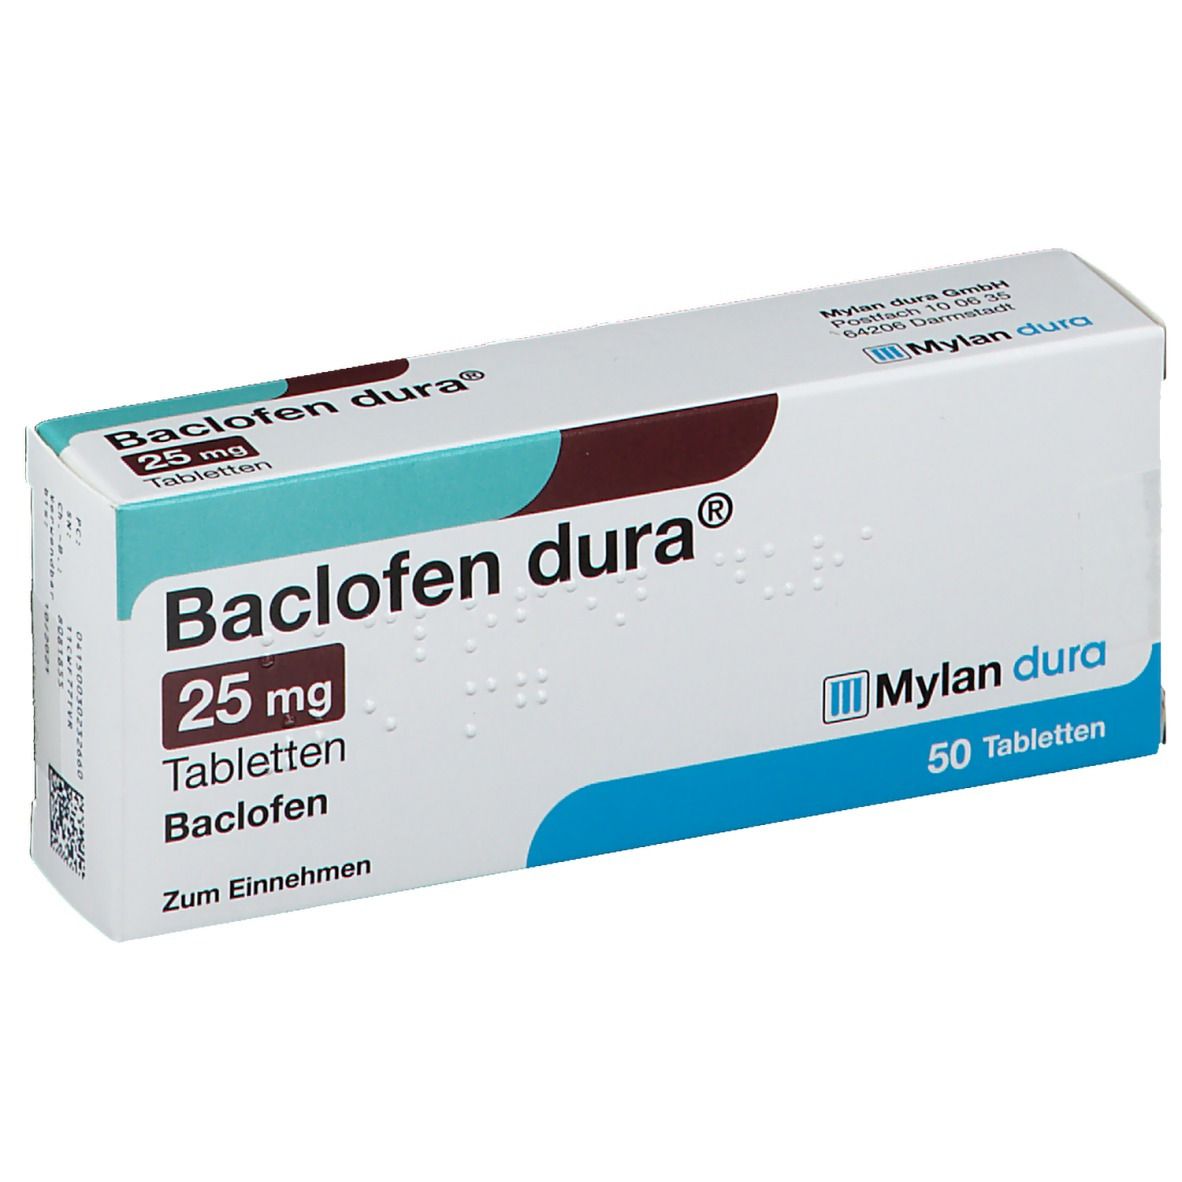 5x baclofen-25mg-kopen.  180EUROS

Diazepam 10mg  30 Tabs
Dormicum 15mg  20 Tabs
Flurazepam 3